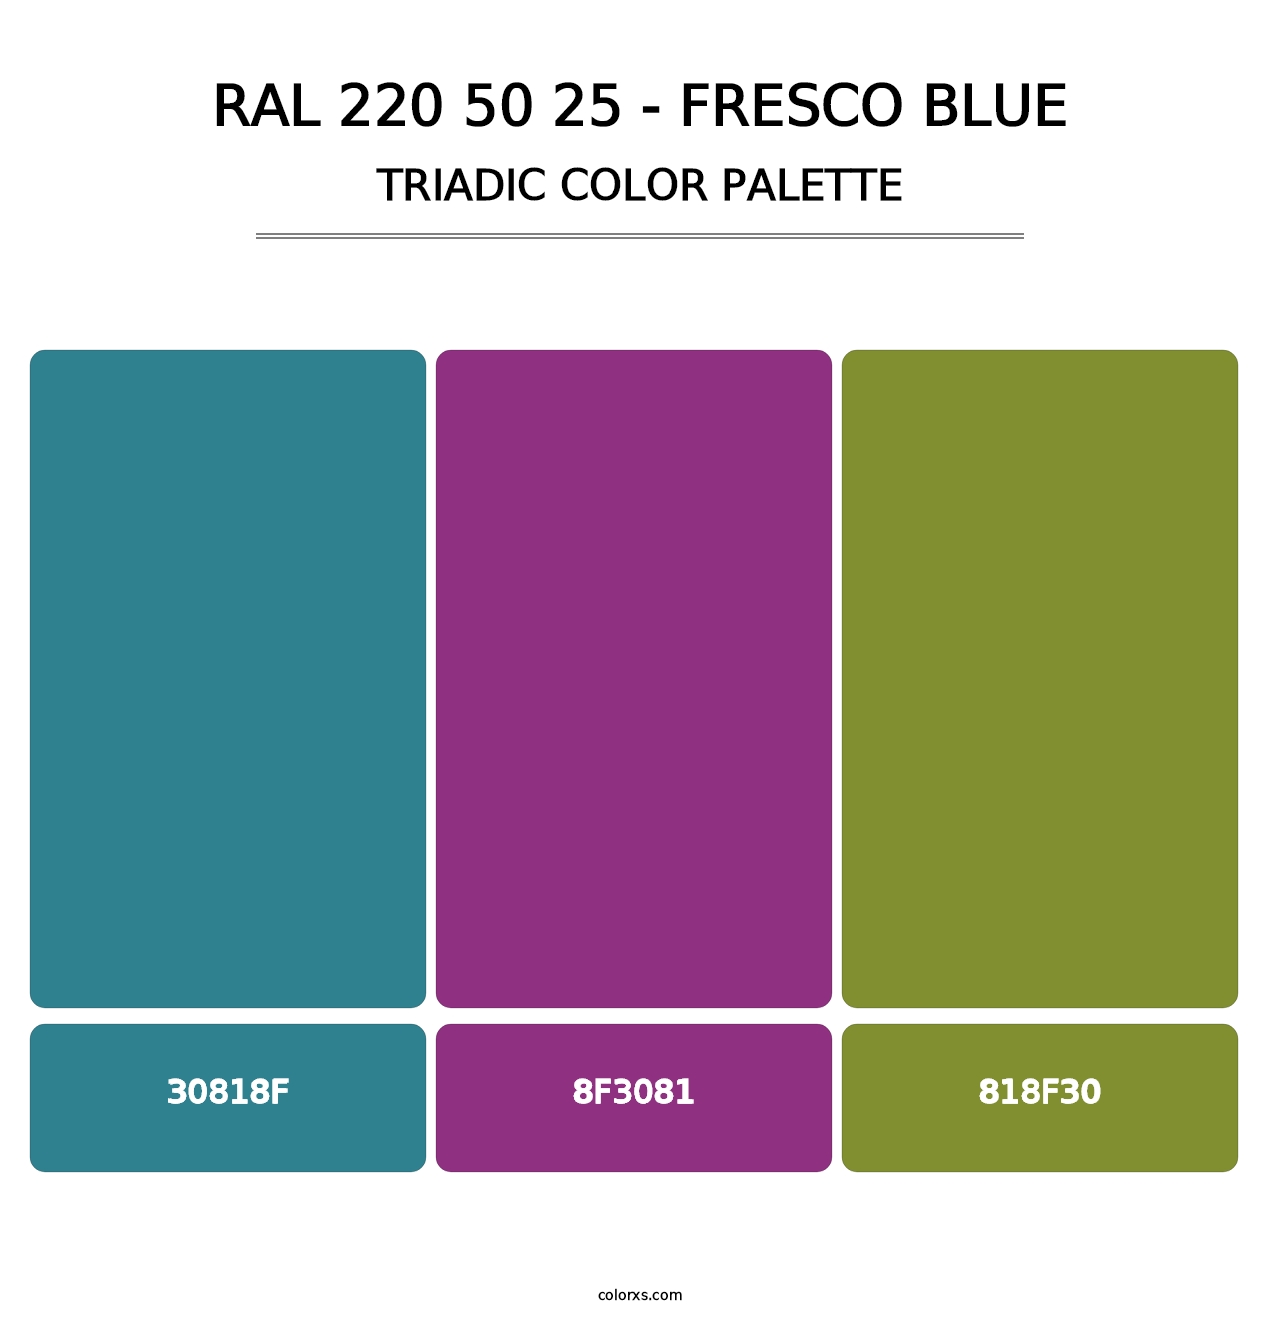 RAL 220 50 25 - Fresco Blue - Triadic Color Palette